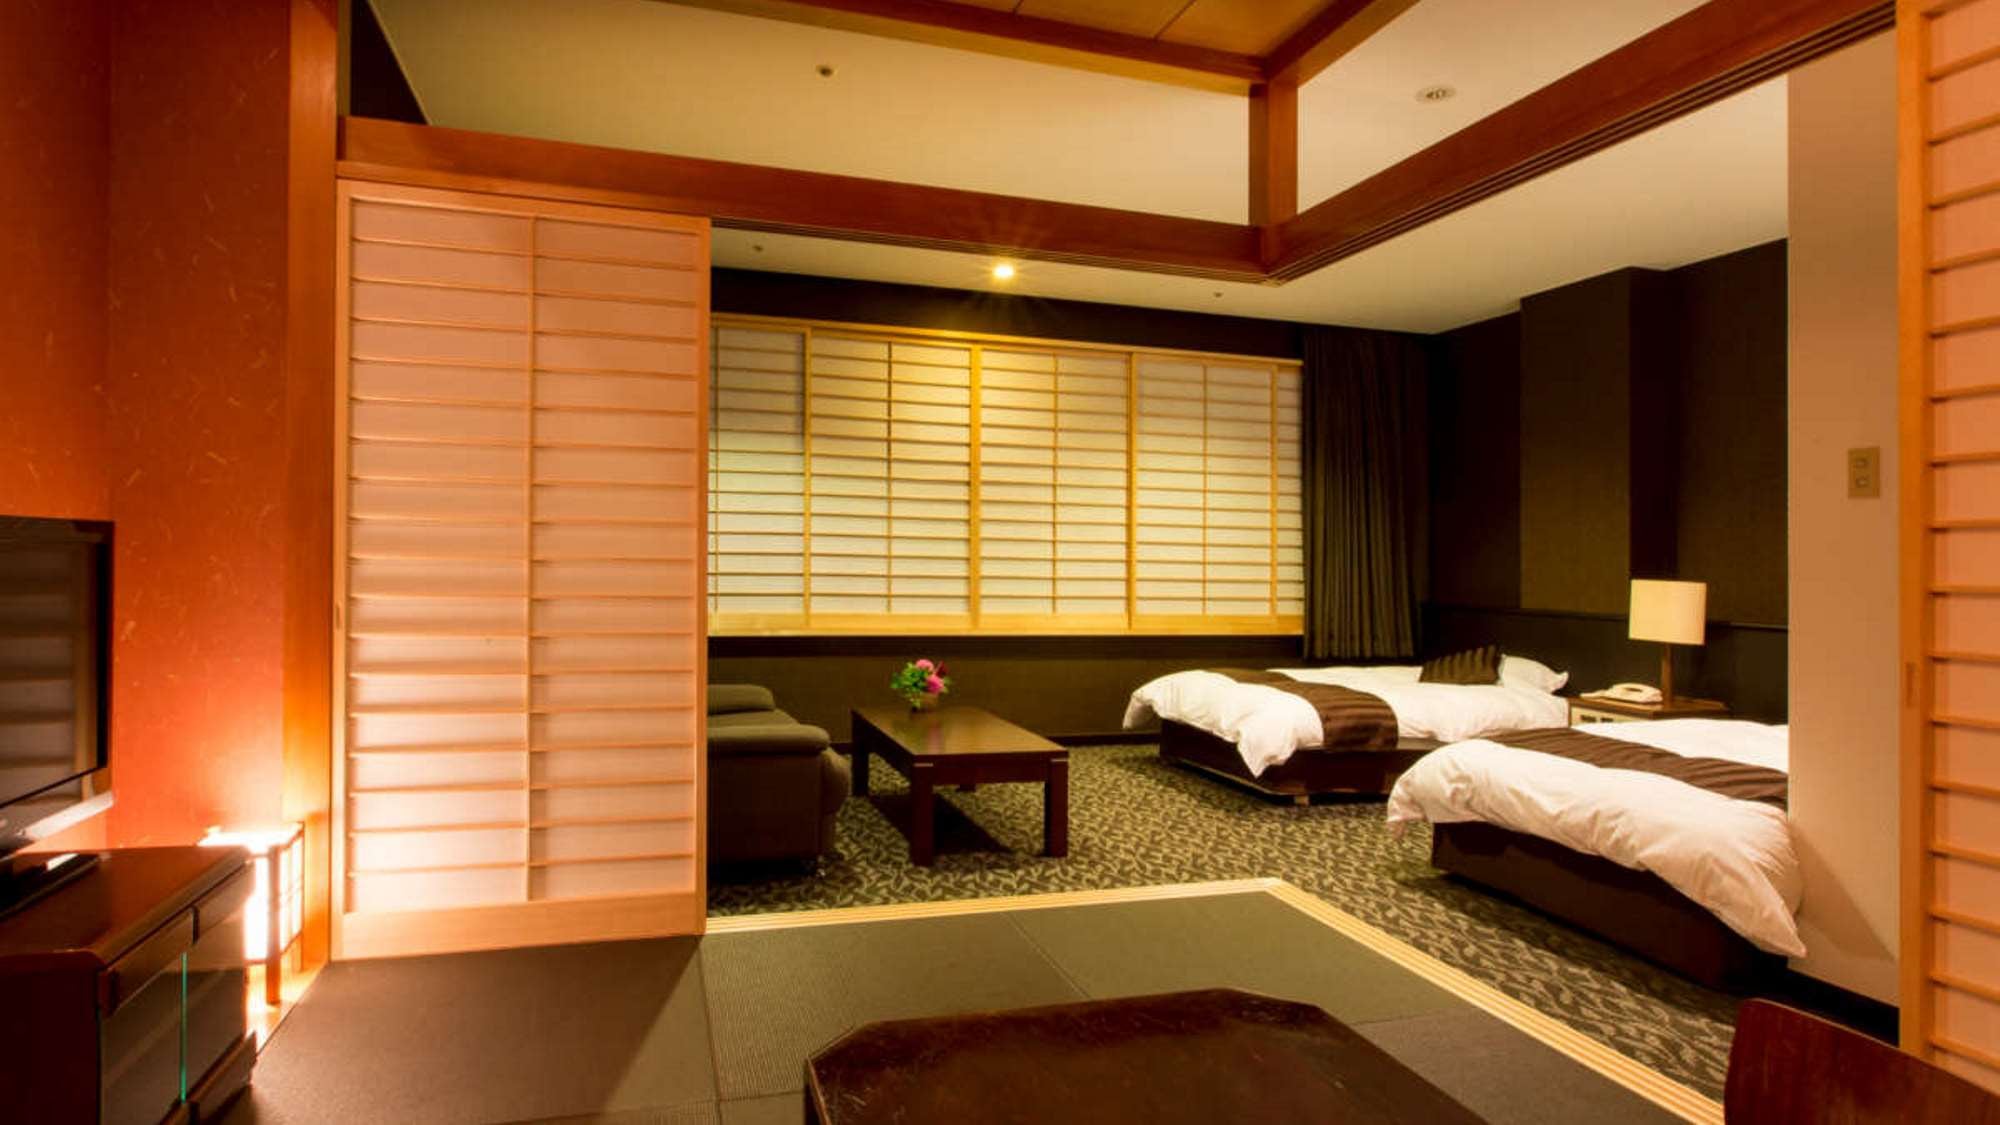 <Kamar> Semi-suite kamar Jepang dan Barat (48㎡) Nada warna tenang berbasis coklat tua.